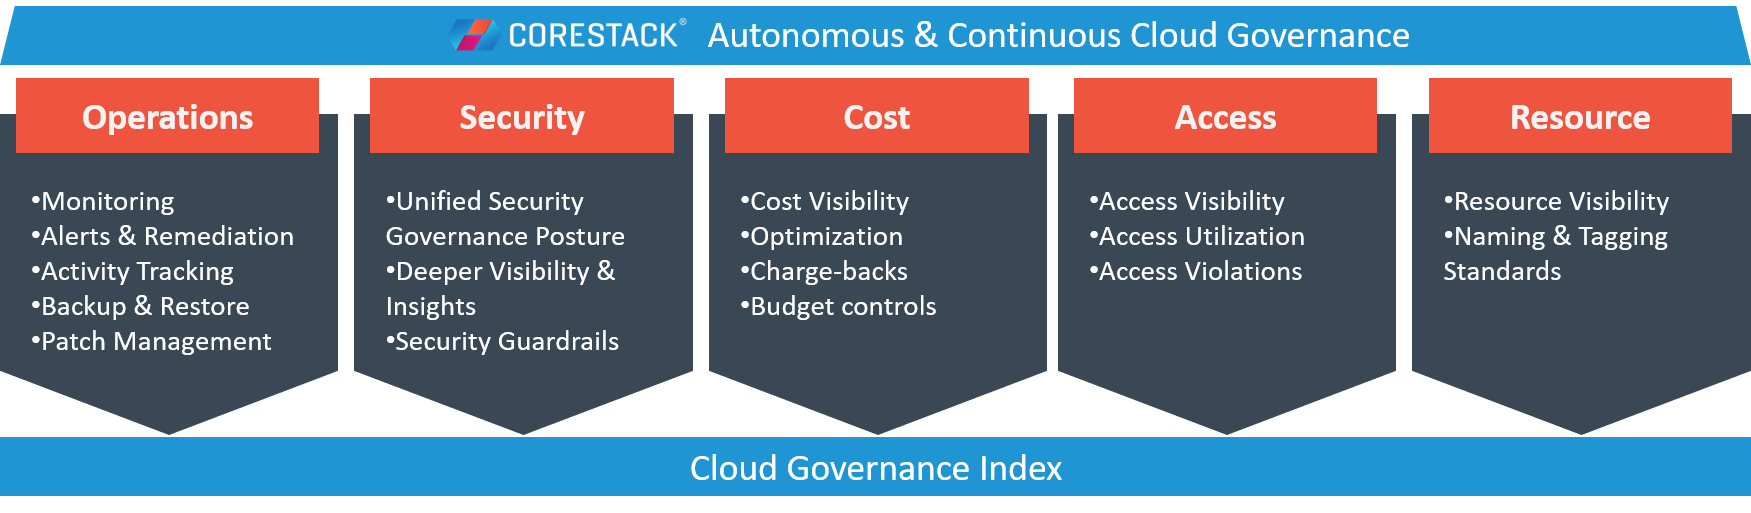 OSCAR Cloud Governance Model